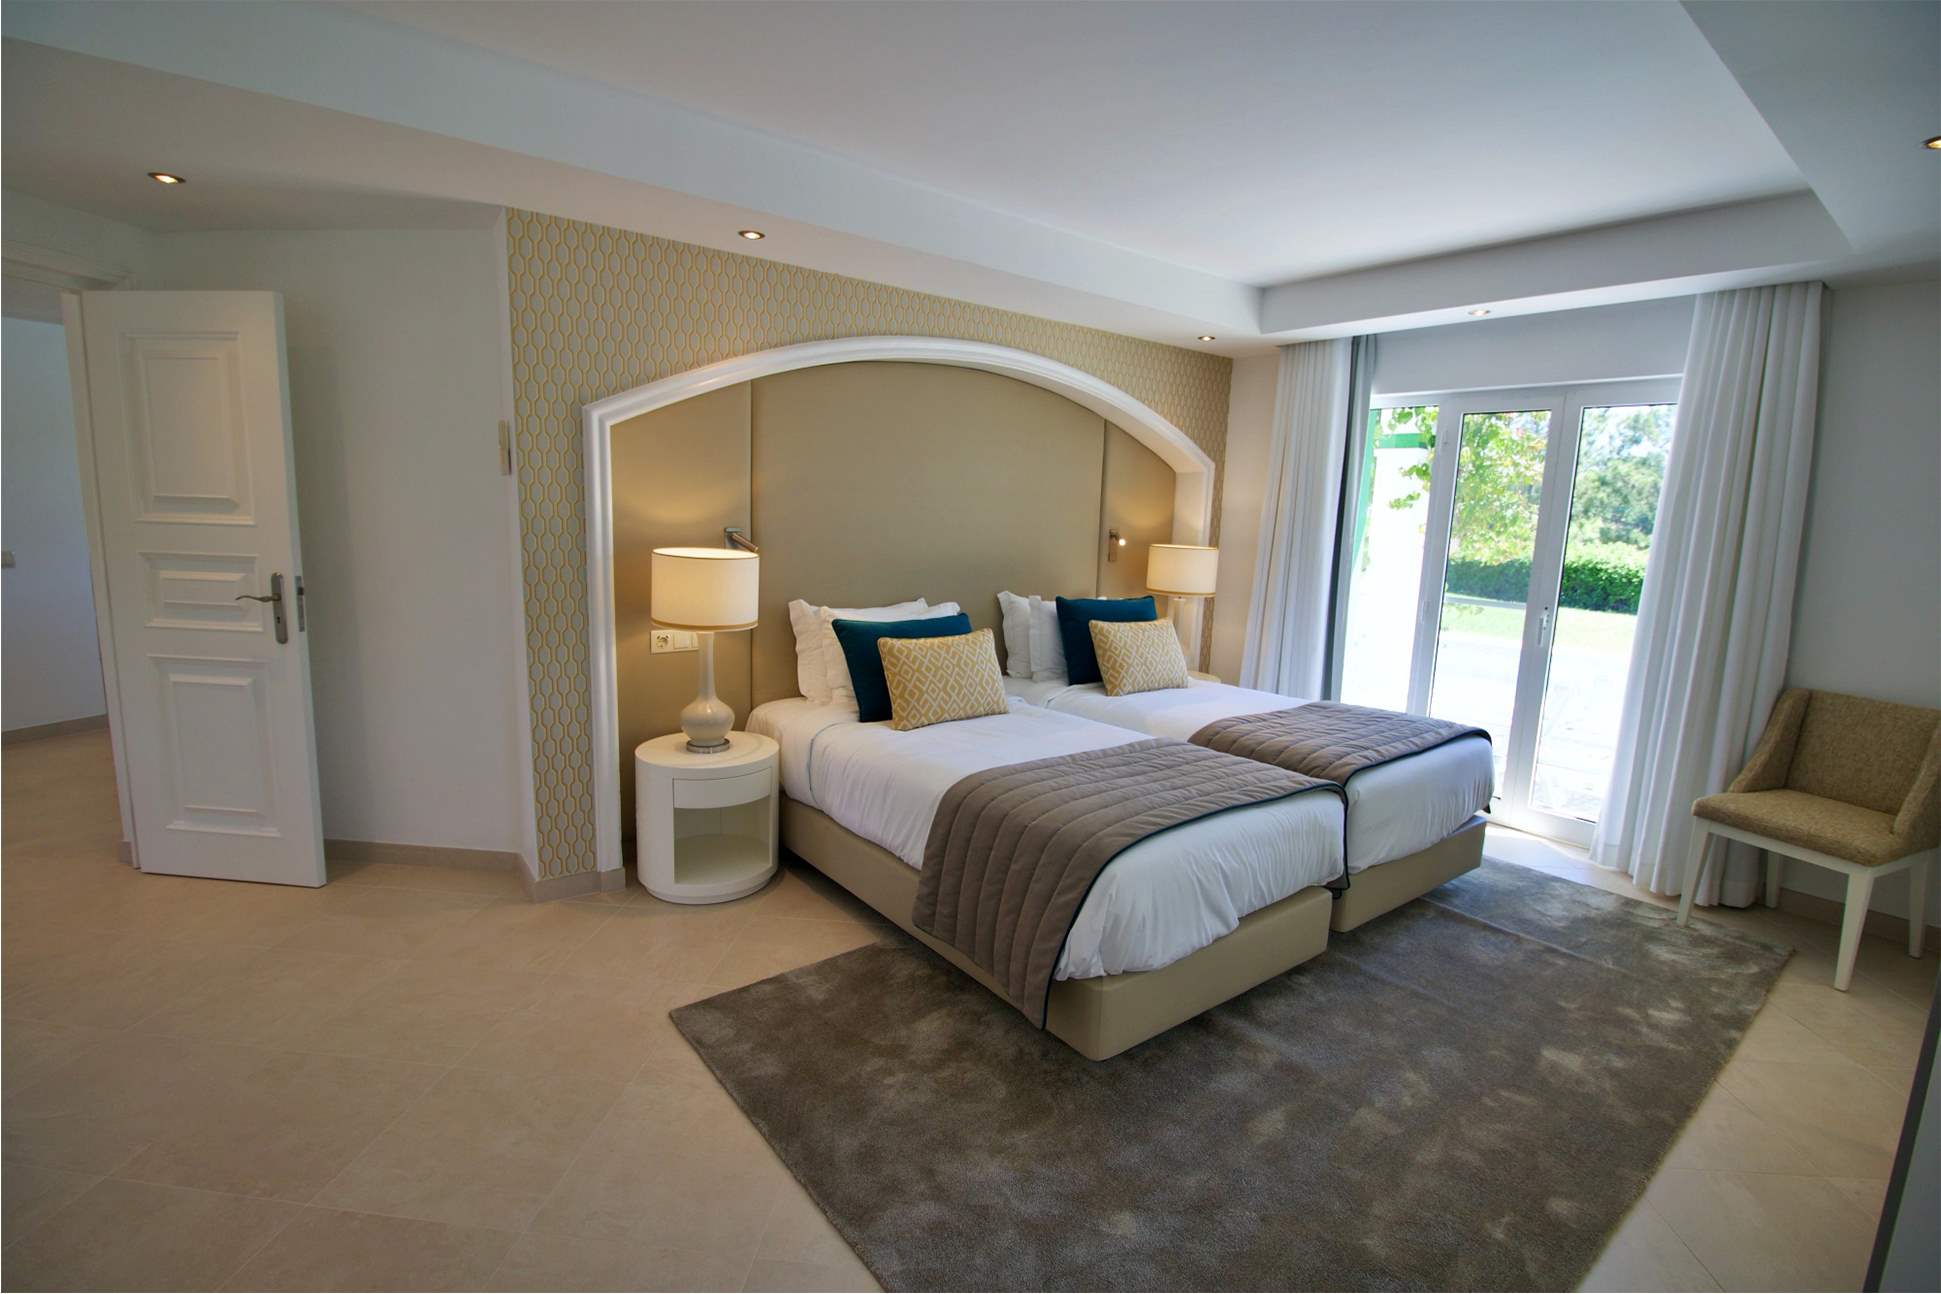 Four Seasons Fairways 2 Bed Cluster Villa + Study, Thursday Arrival, 2 bedroom villa in Four Seasons Fairways, Algarve Photo #8